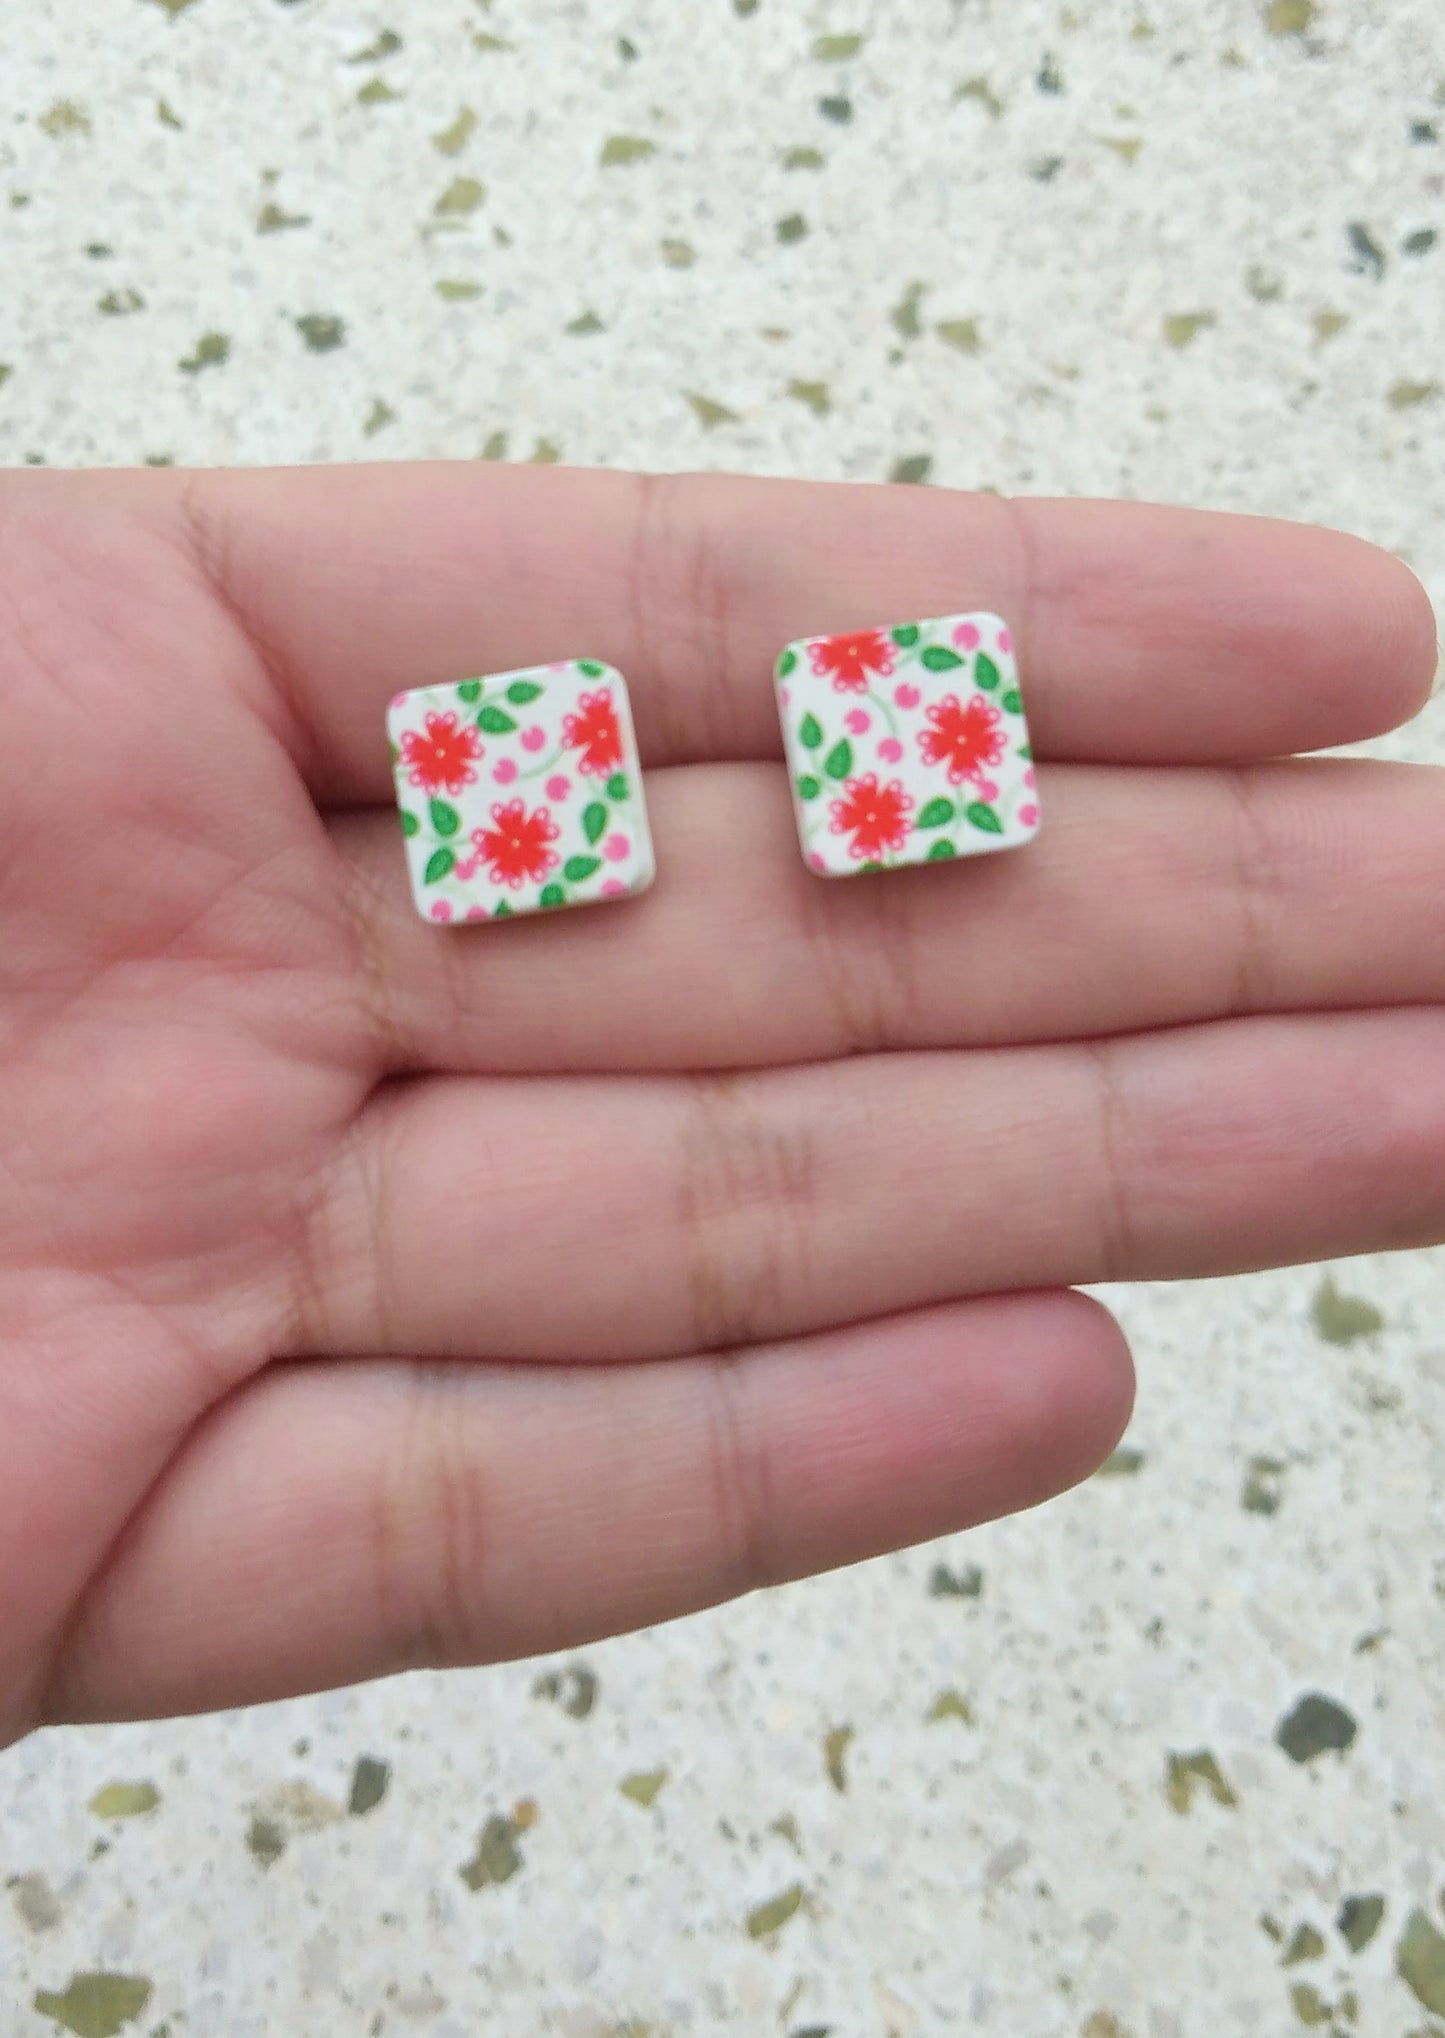 Floral Stud Earrings, Geometric Square Earrings, Gifts Under 10